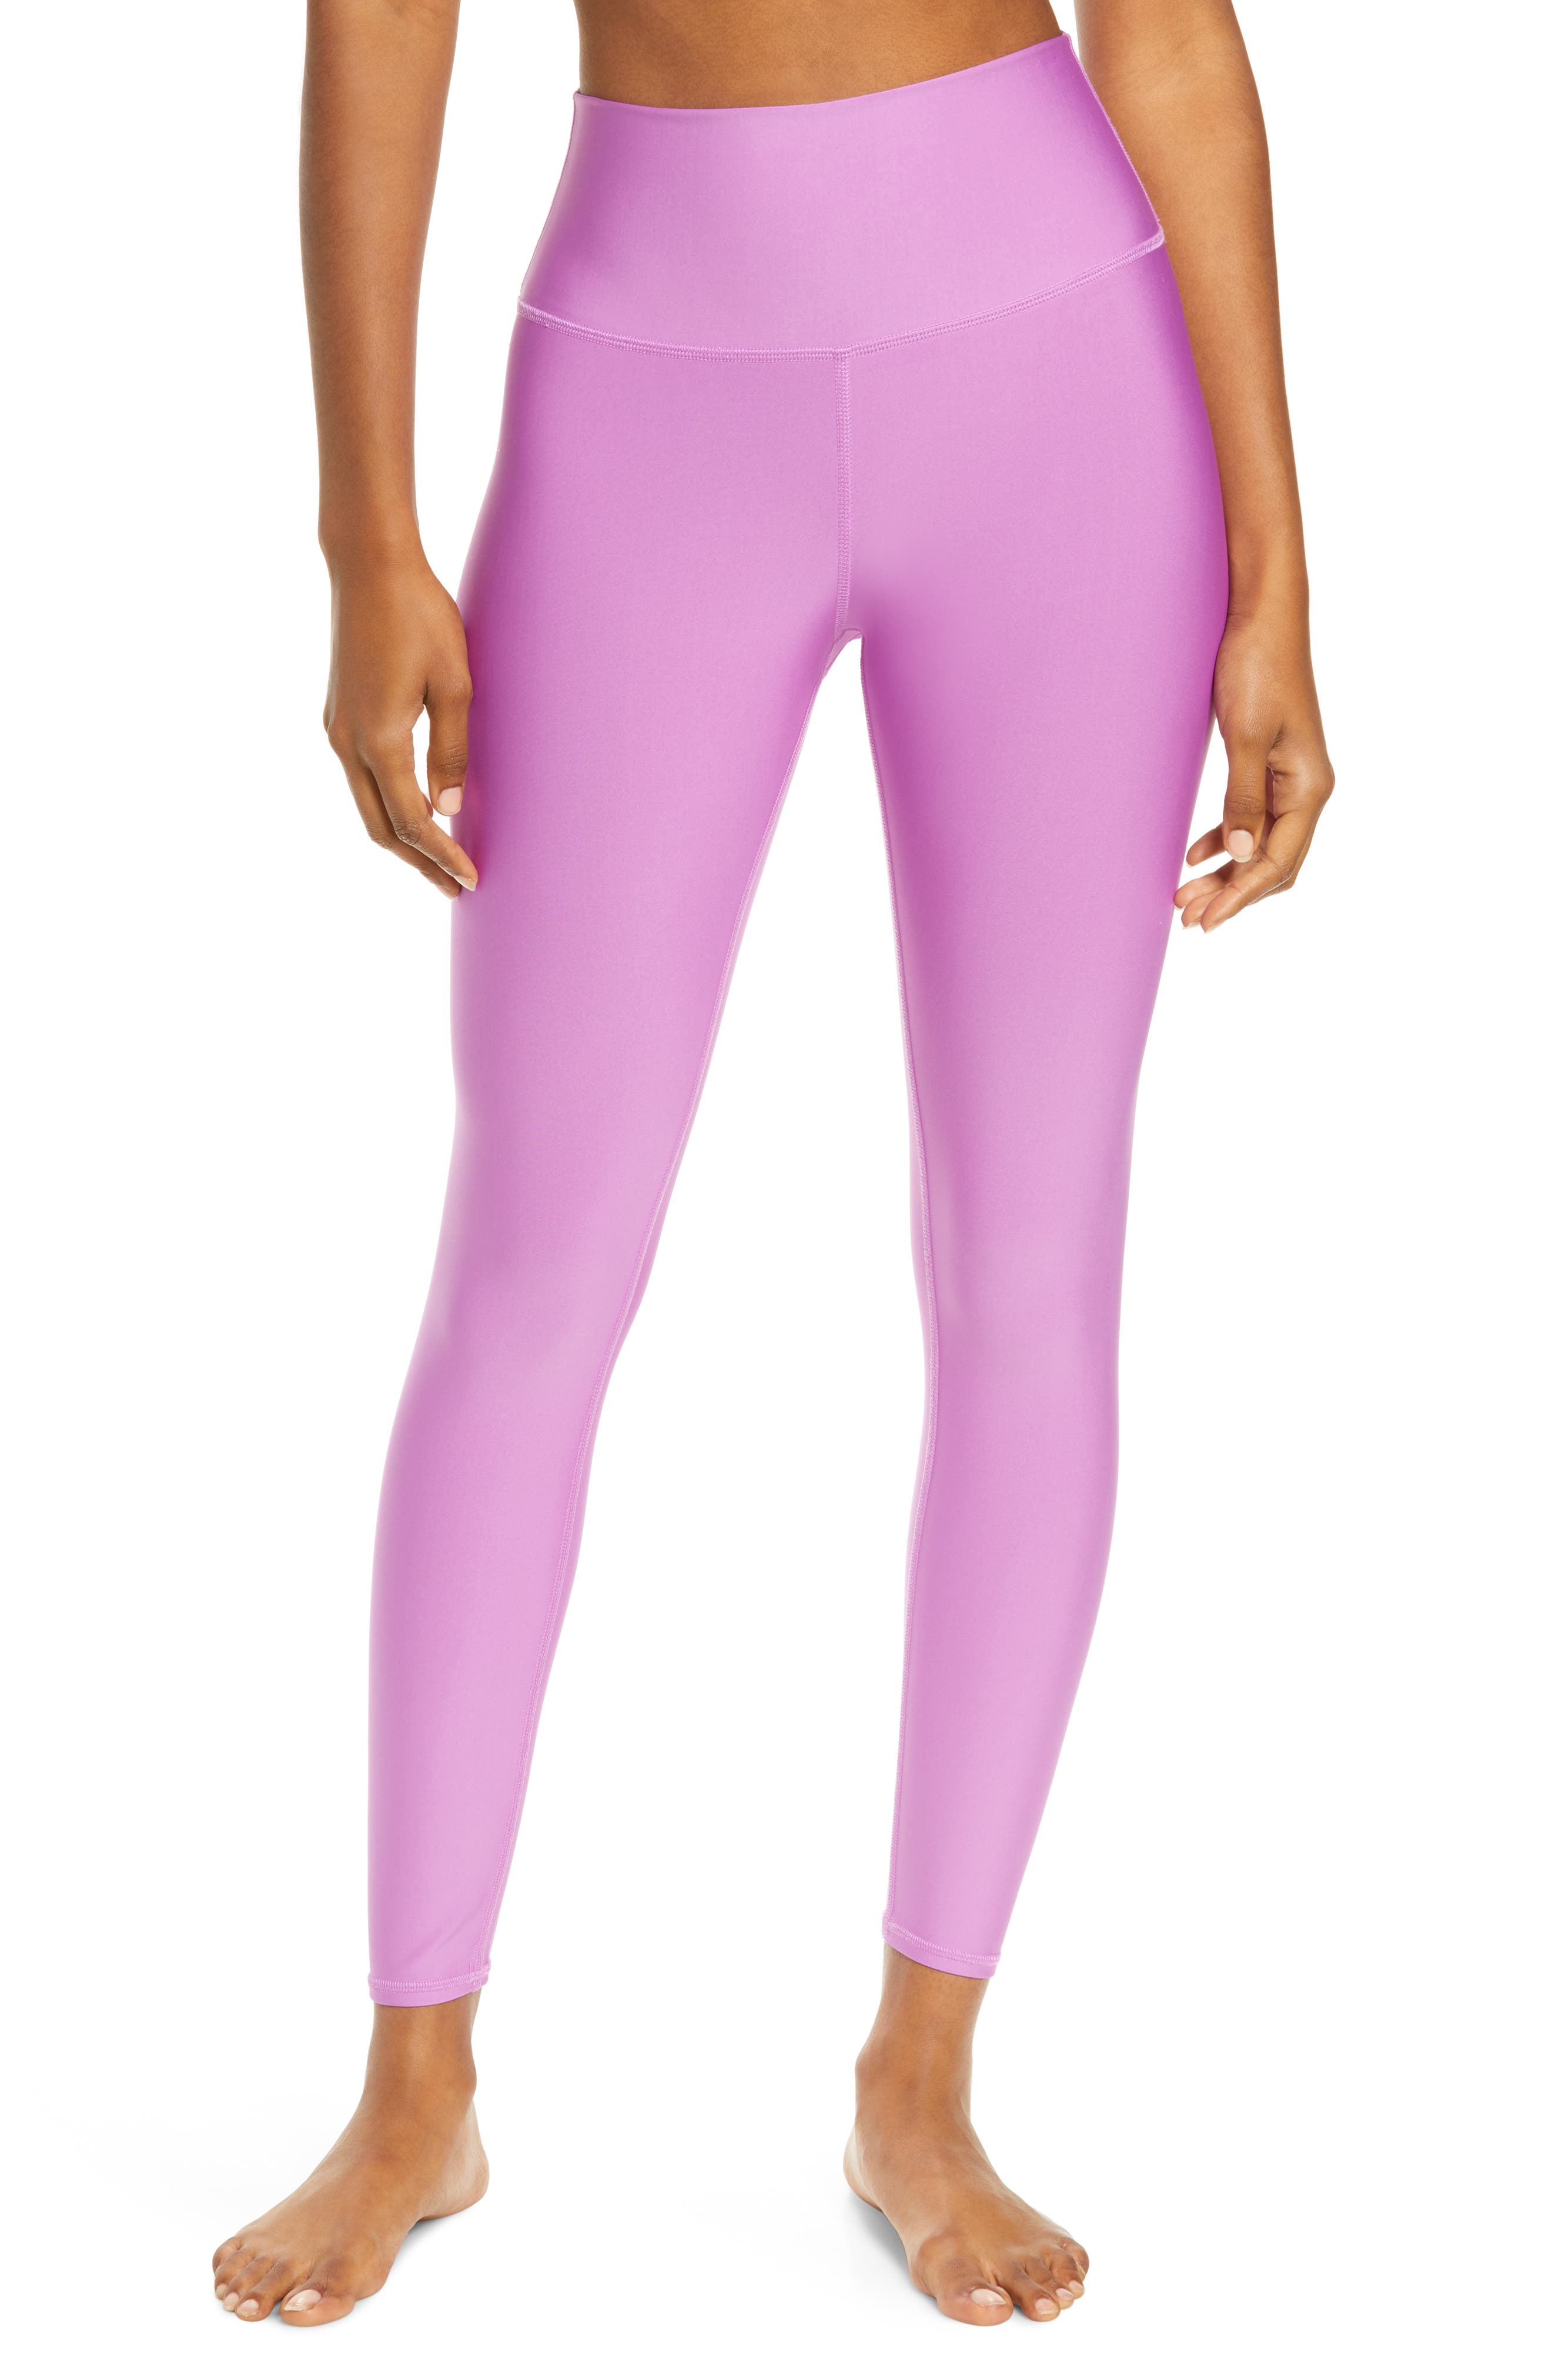 light pink athletic leggings